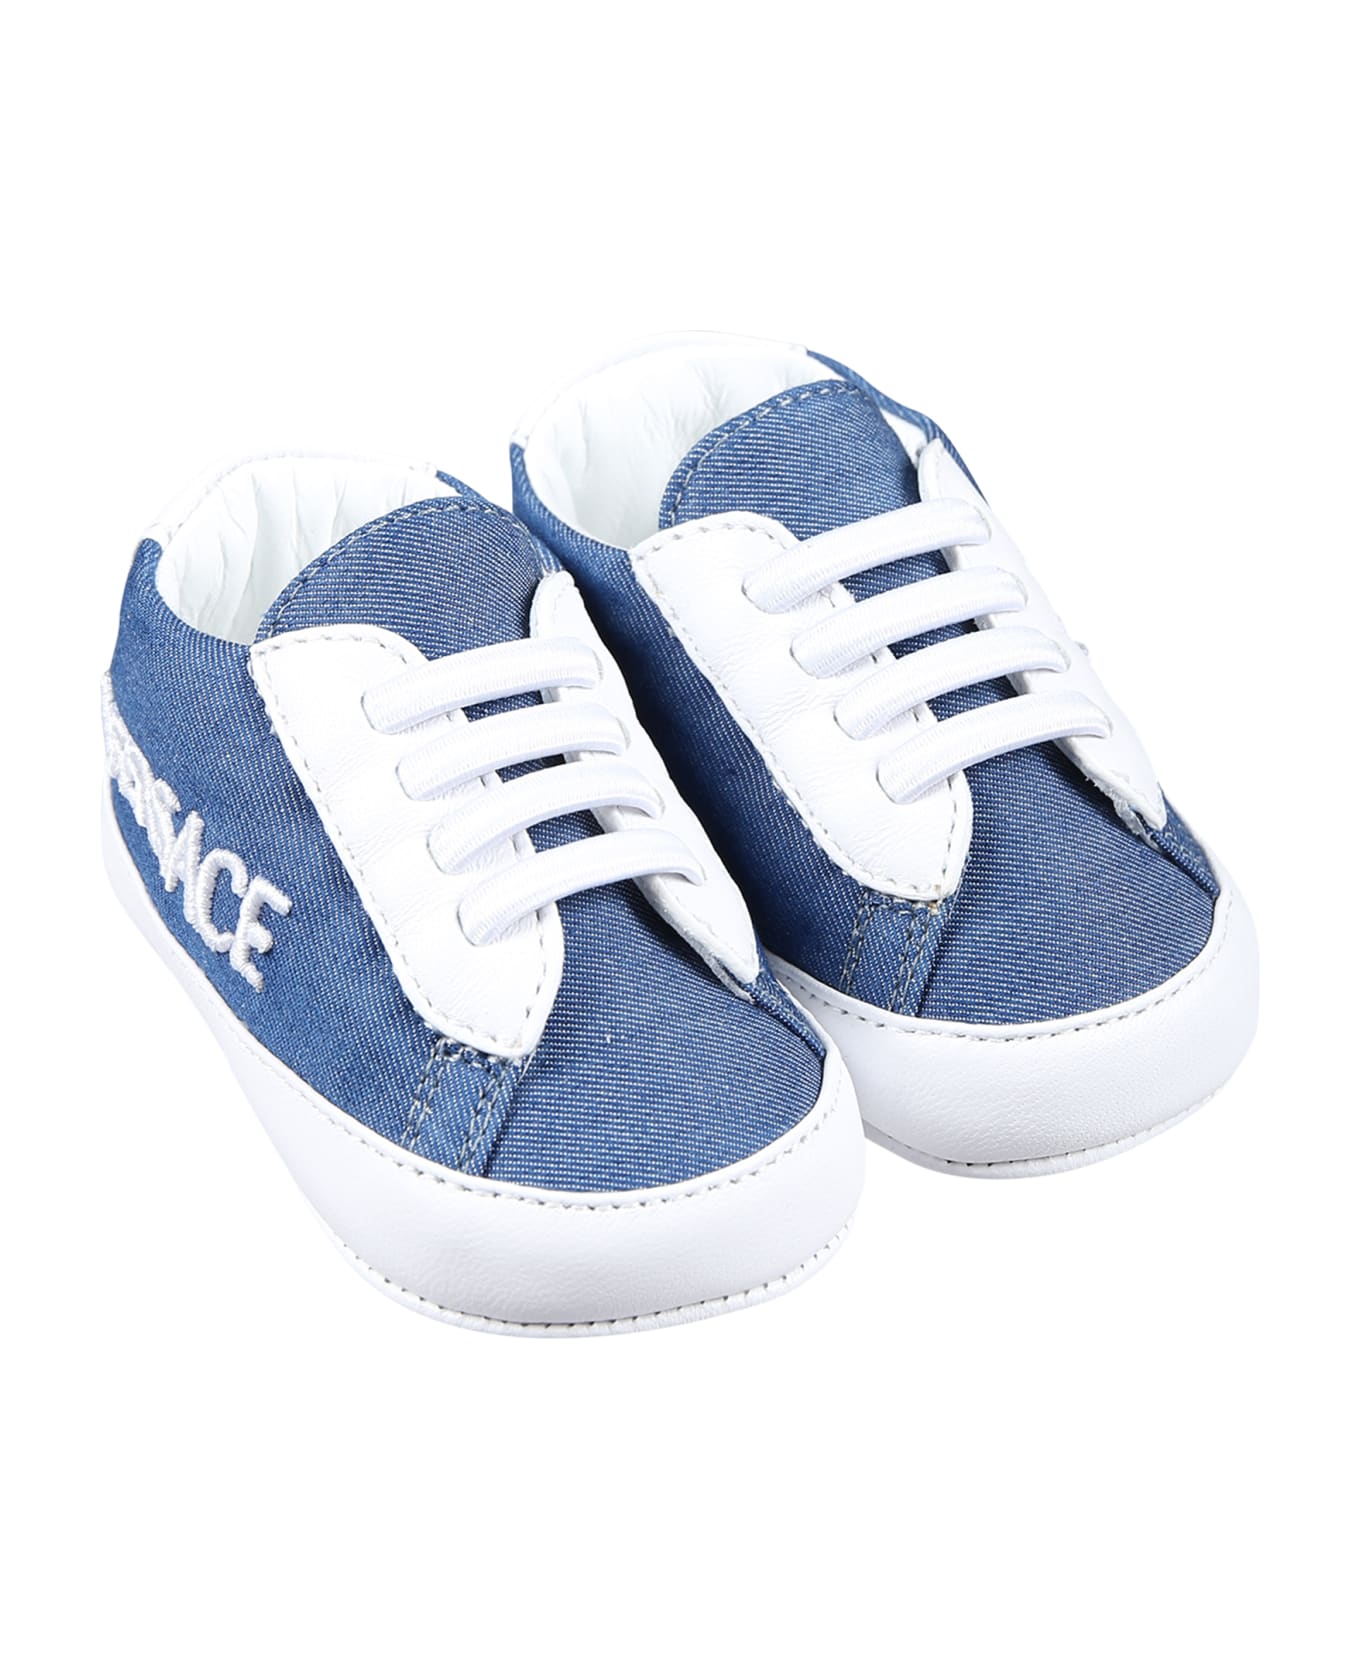 Versace Denim Sneakers For Babies With Logo - Denim